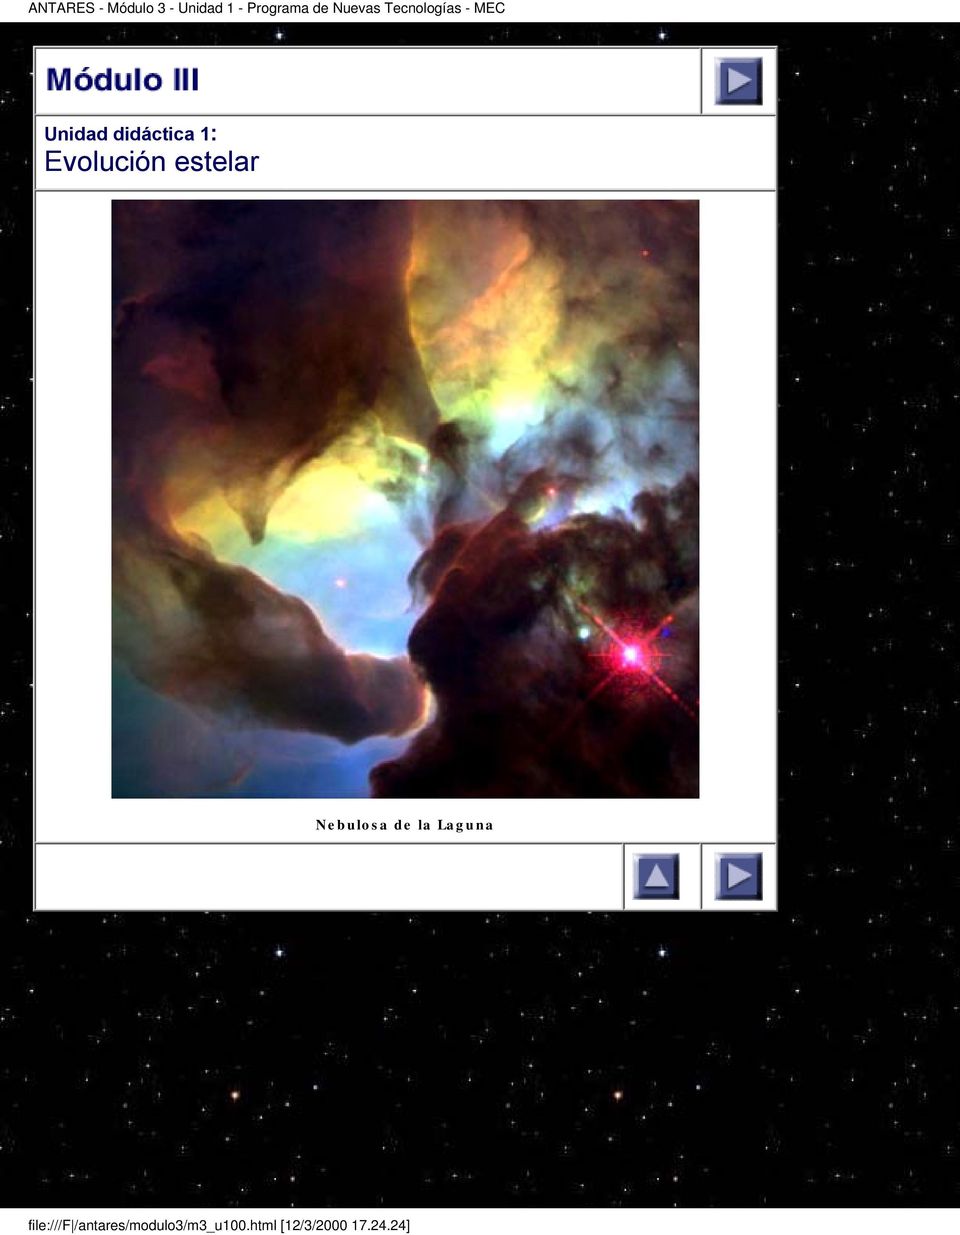 Evolución estelar Nebulosa de la Laguna